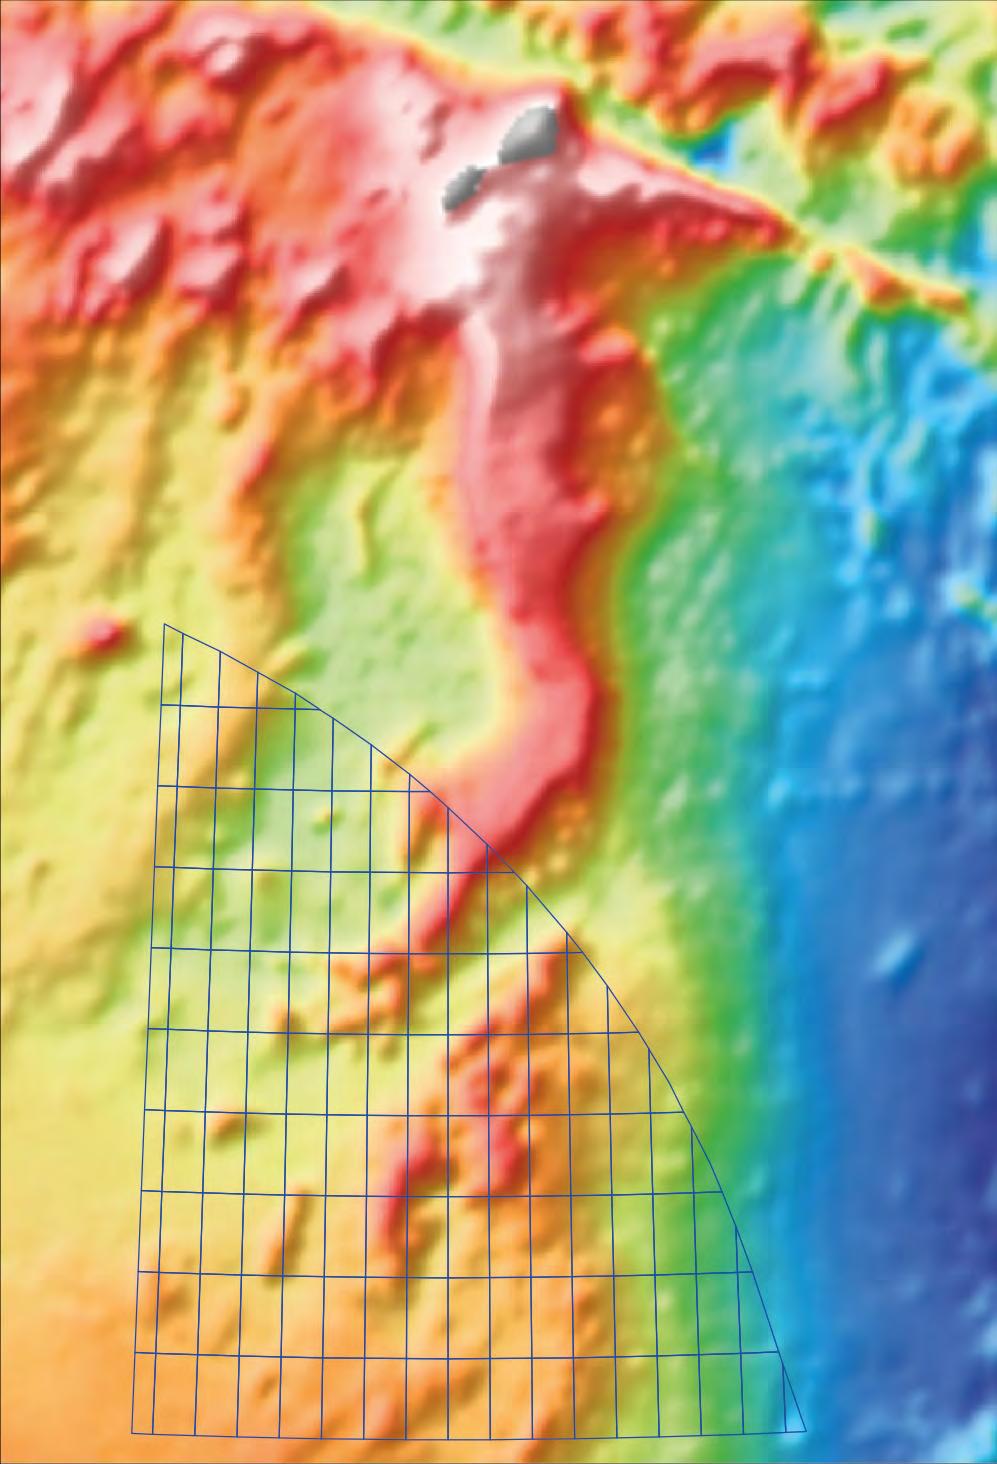 Jan Mayen Ridge geology and hydrocarbon